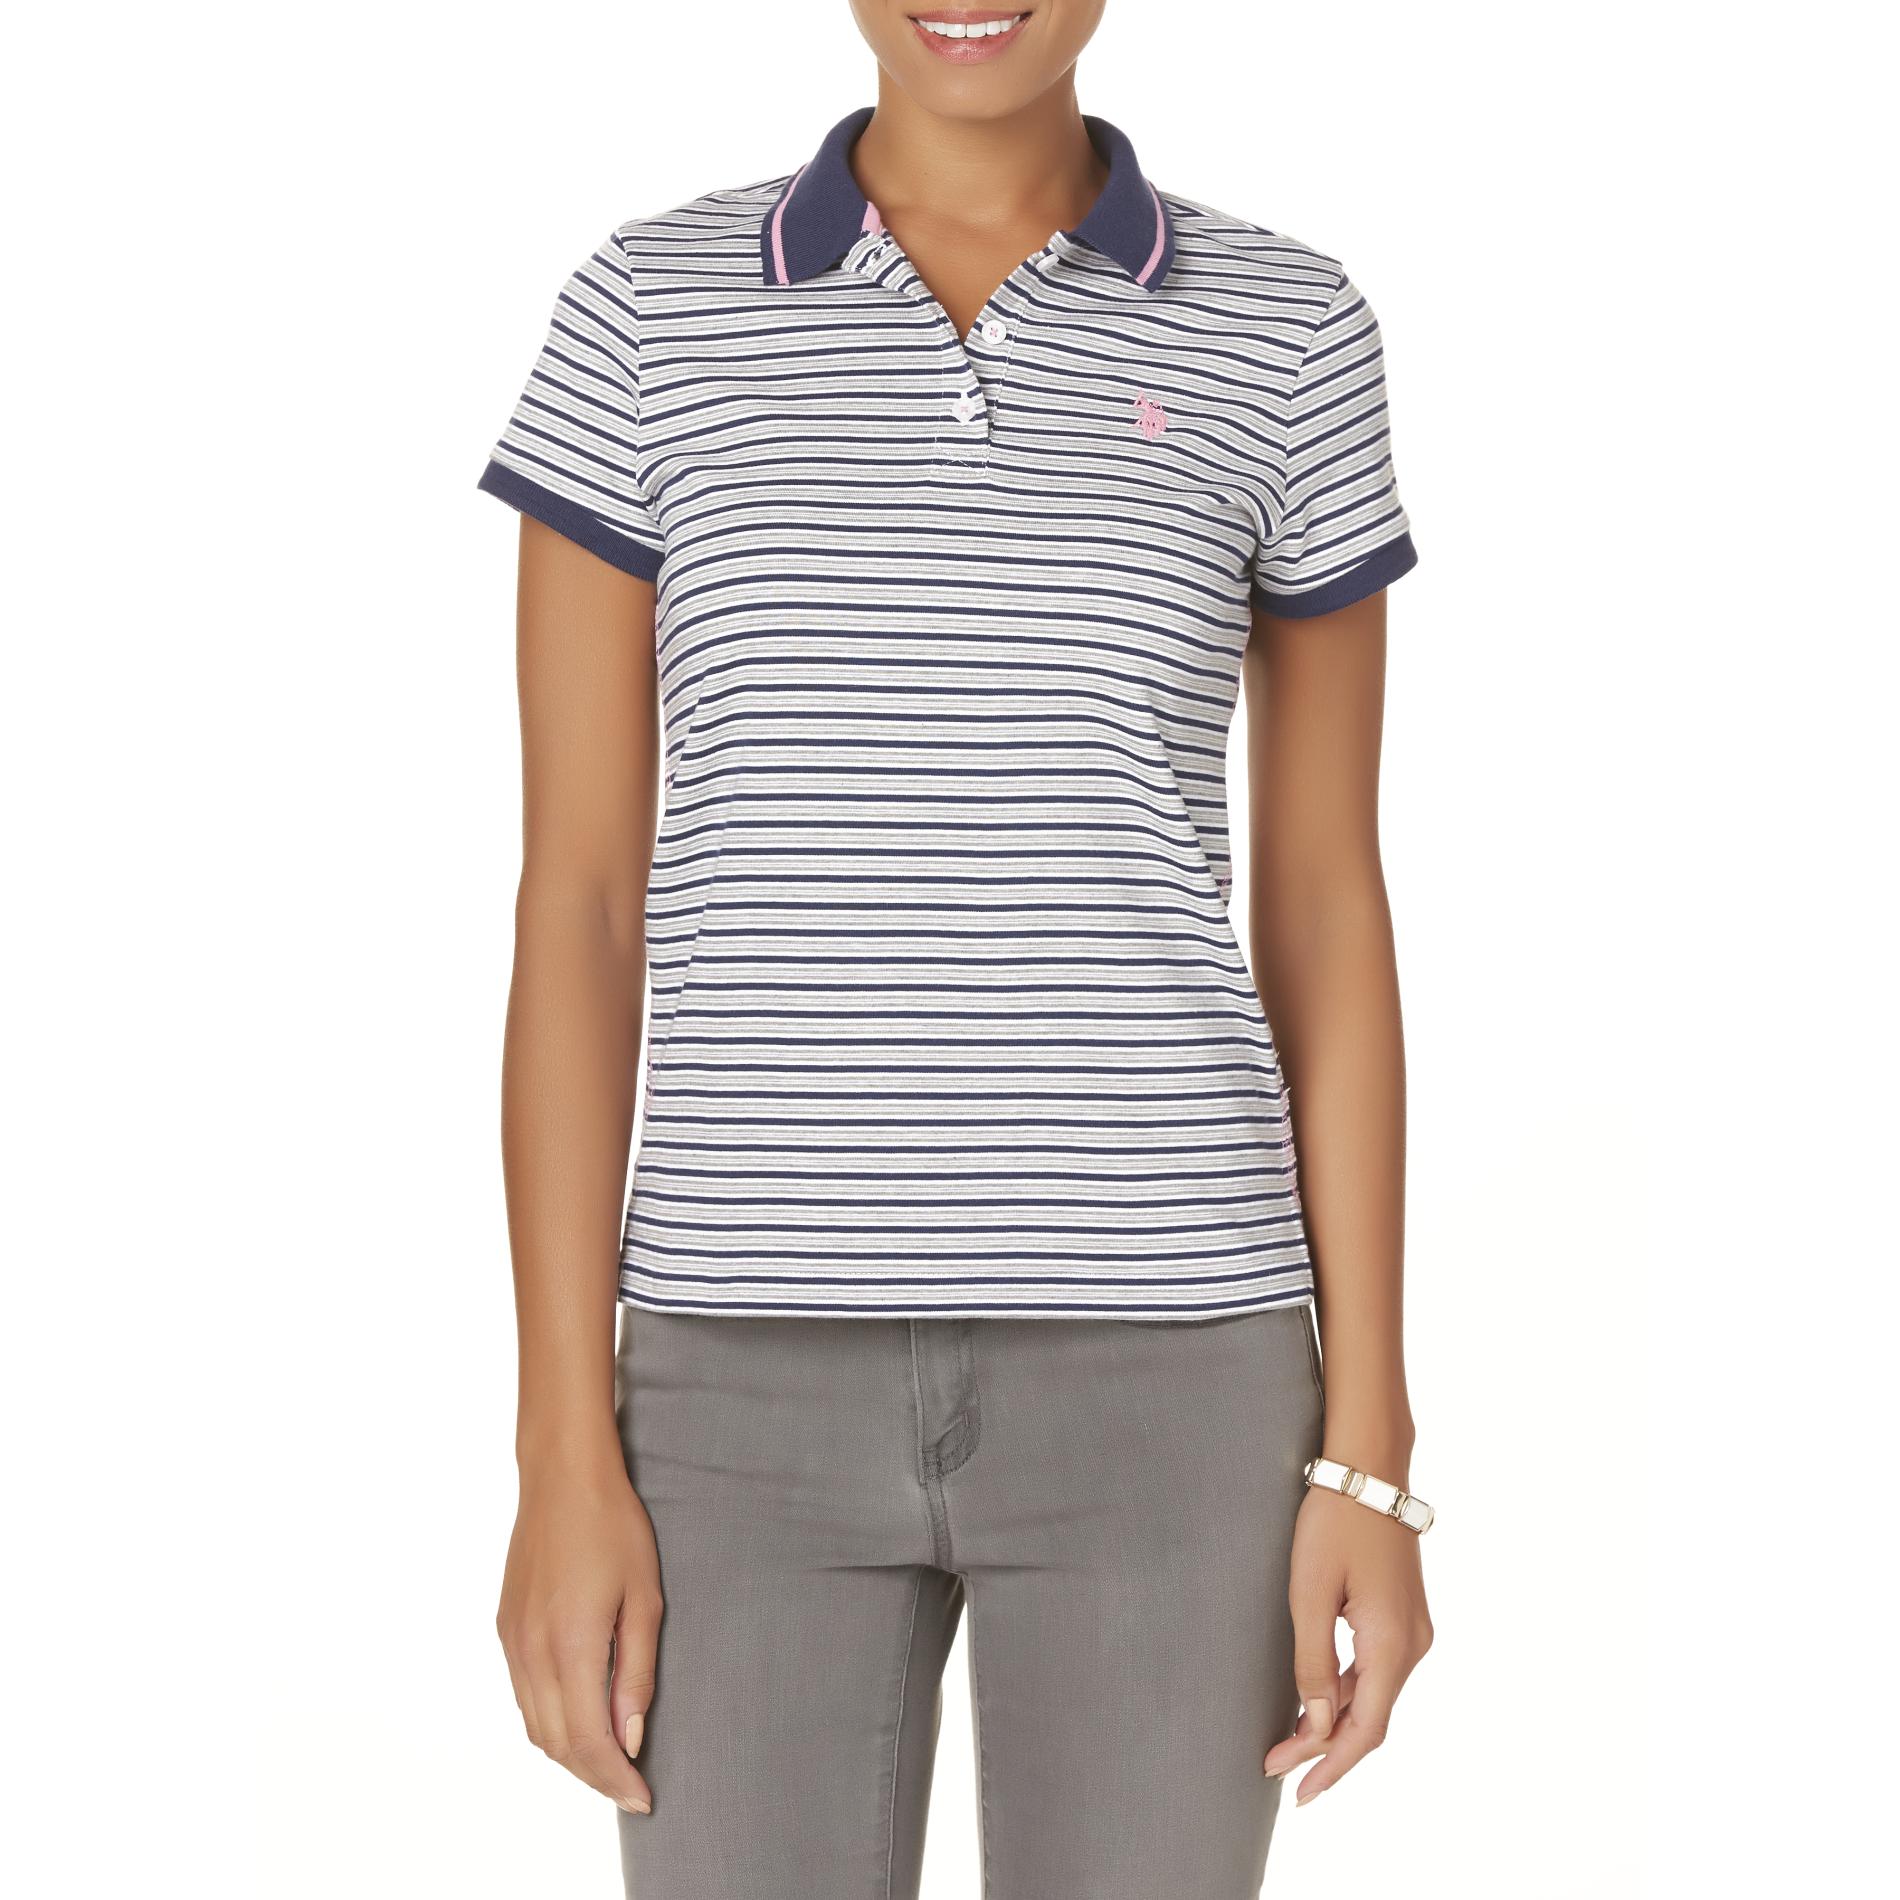 U.S. Polo Assn. Women's Polo Shirt - Striped